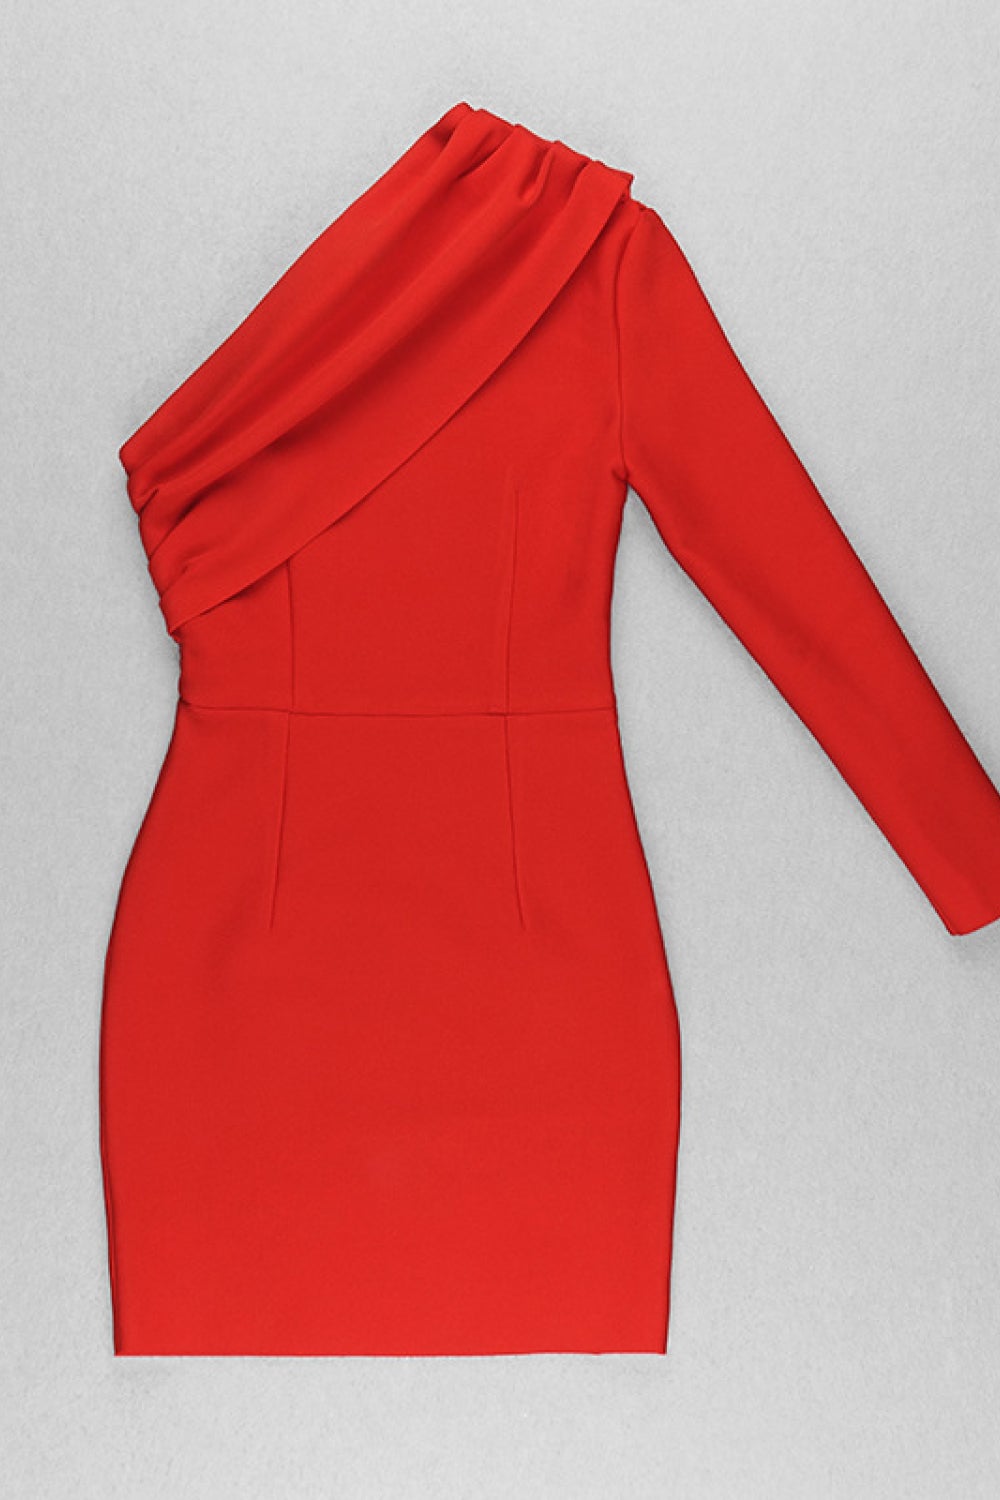 Asymmetrical Neck One-Shoulder Red Bodycon Dress